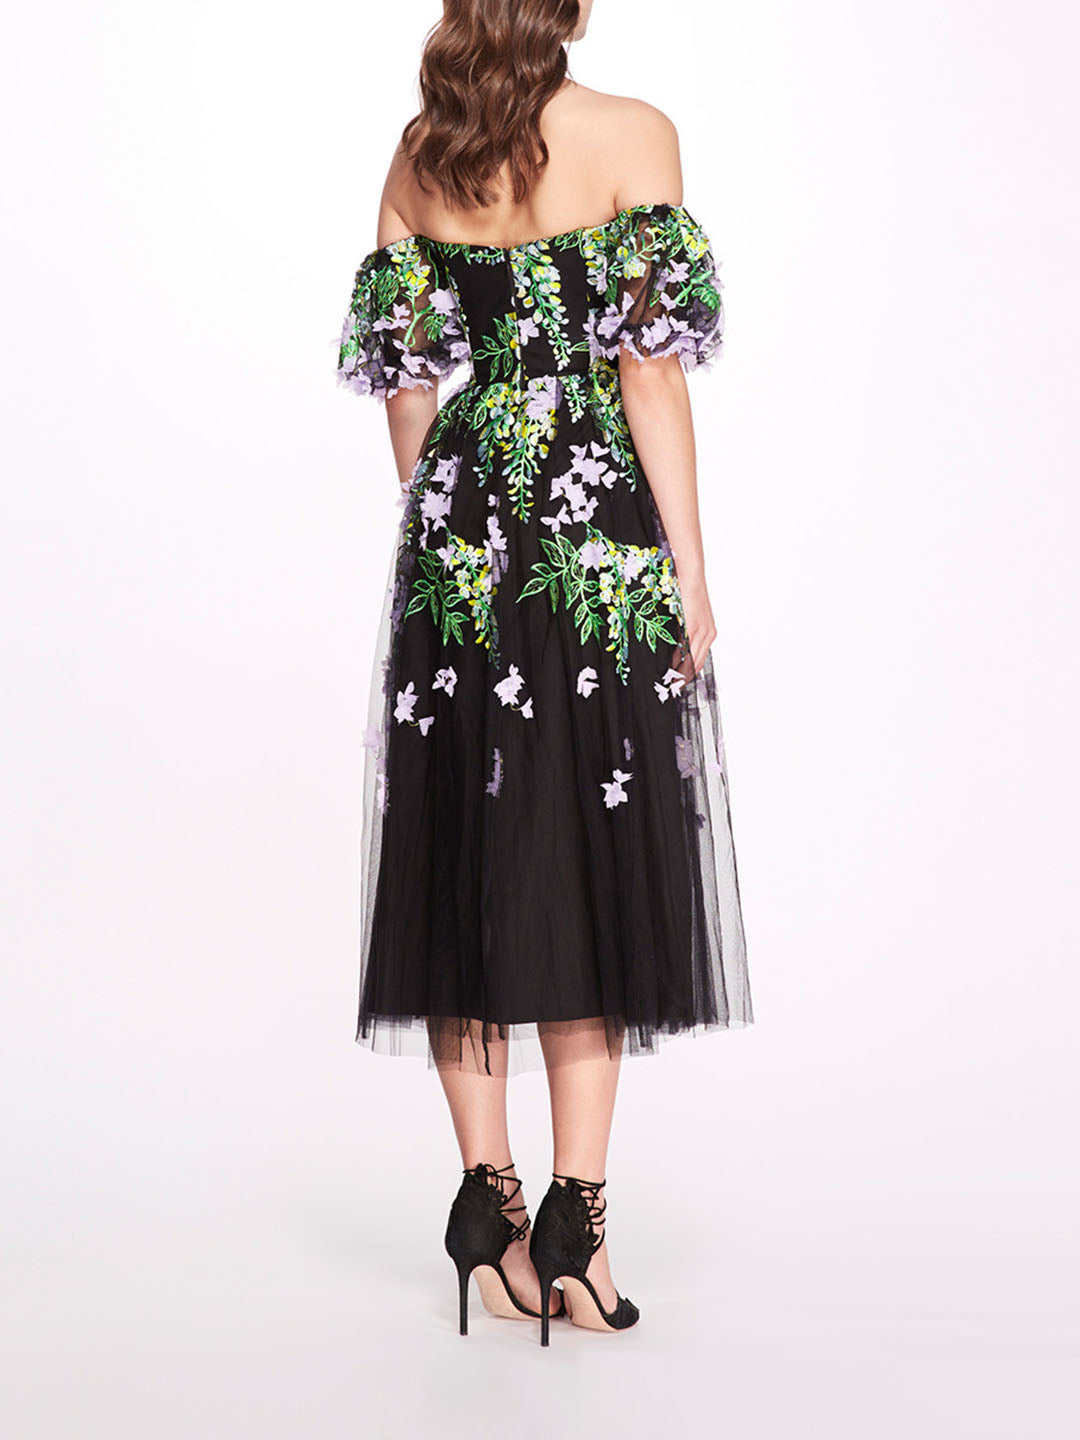 wisteria dress